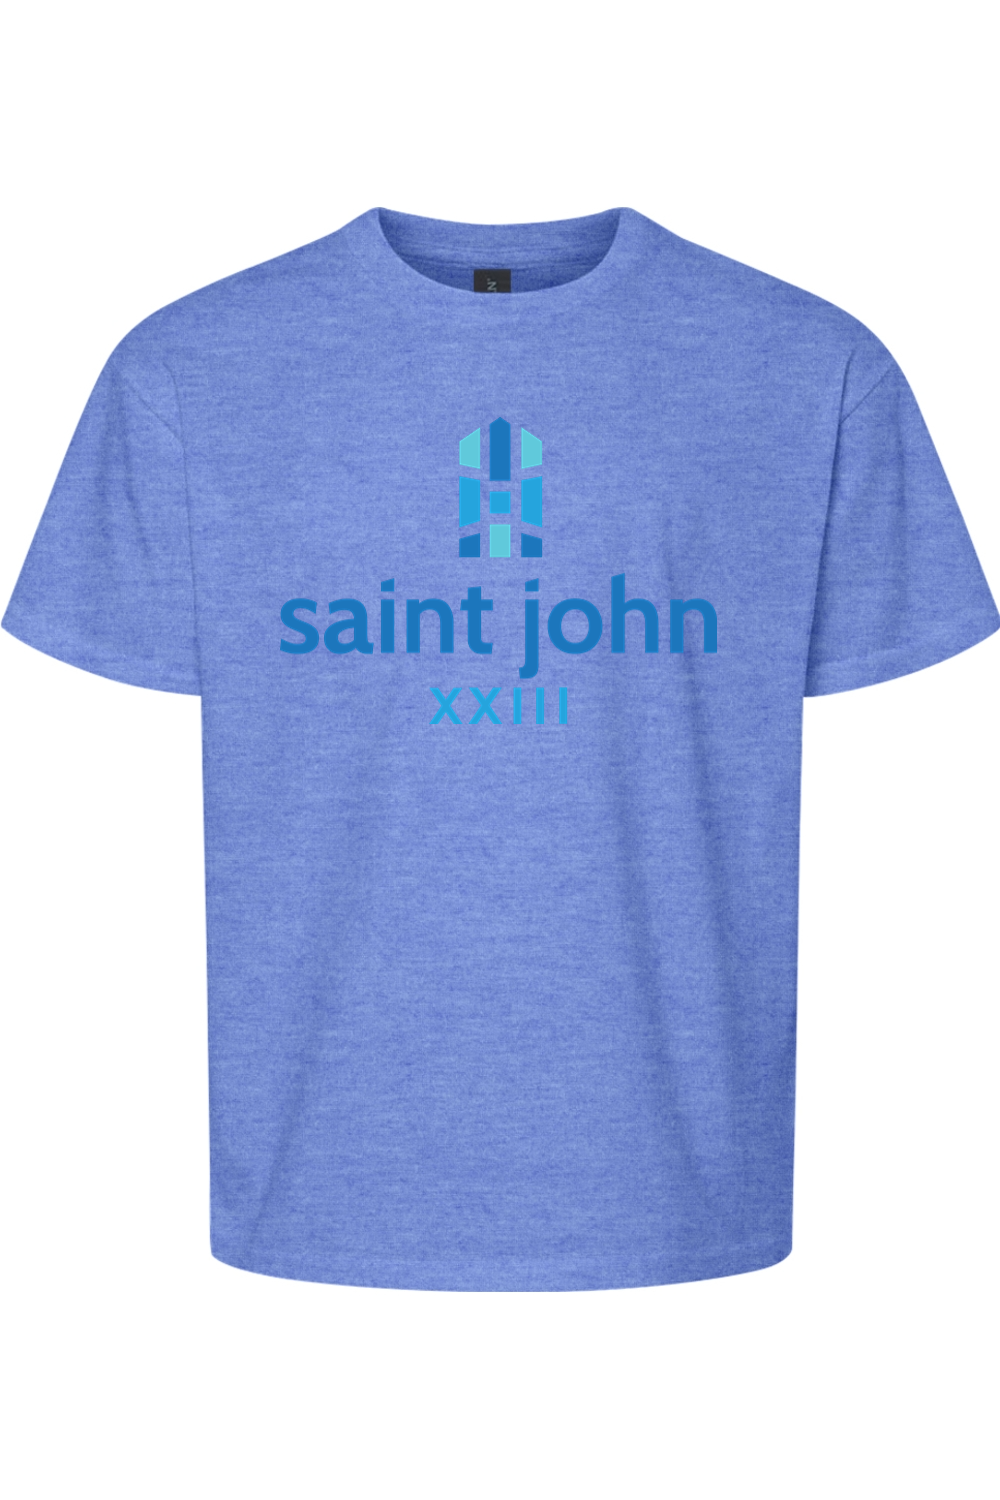 St. John XXIII Youth Color